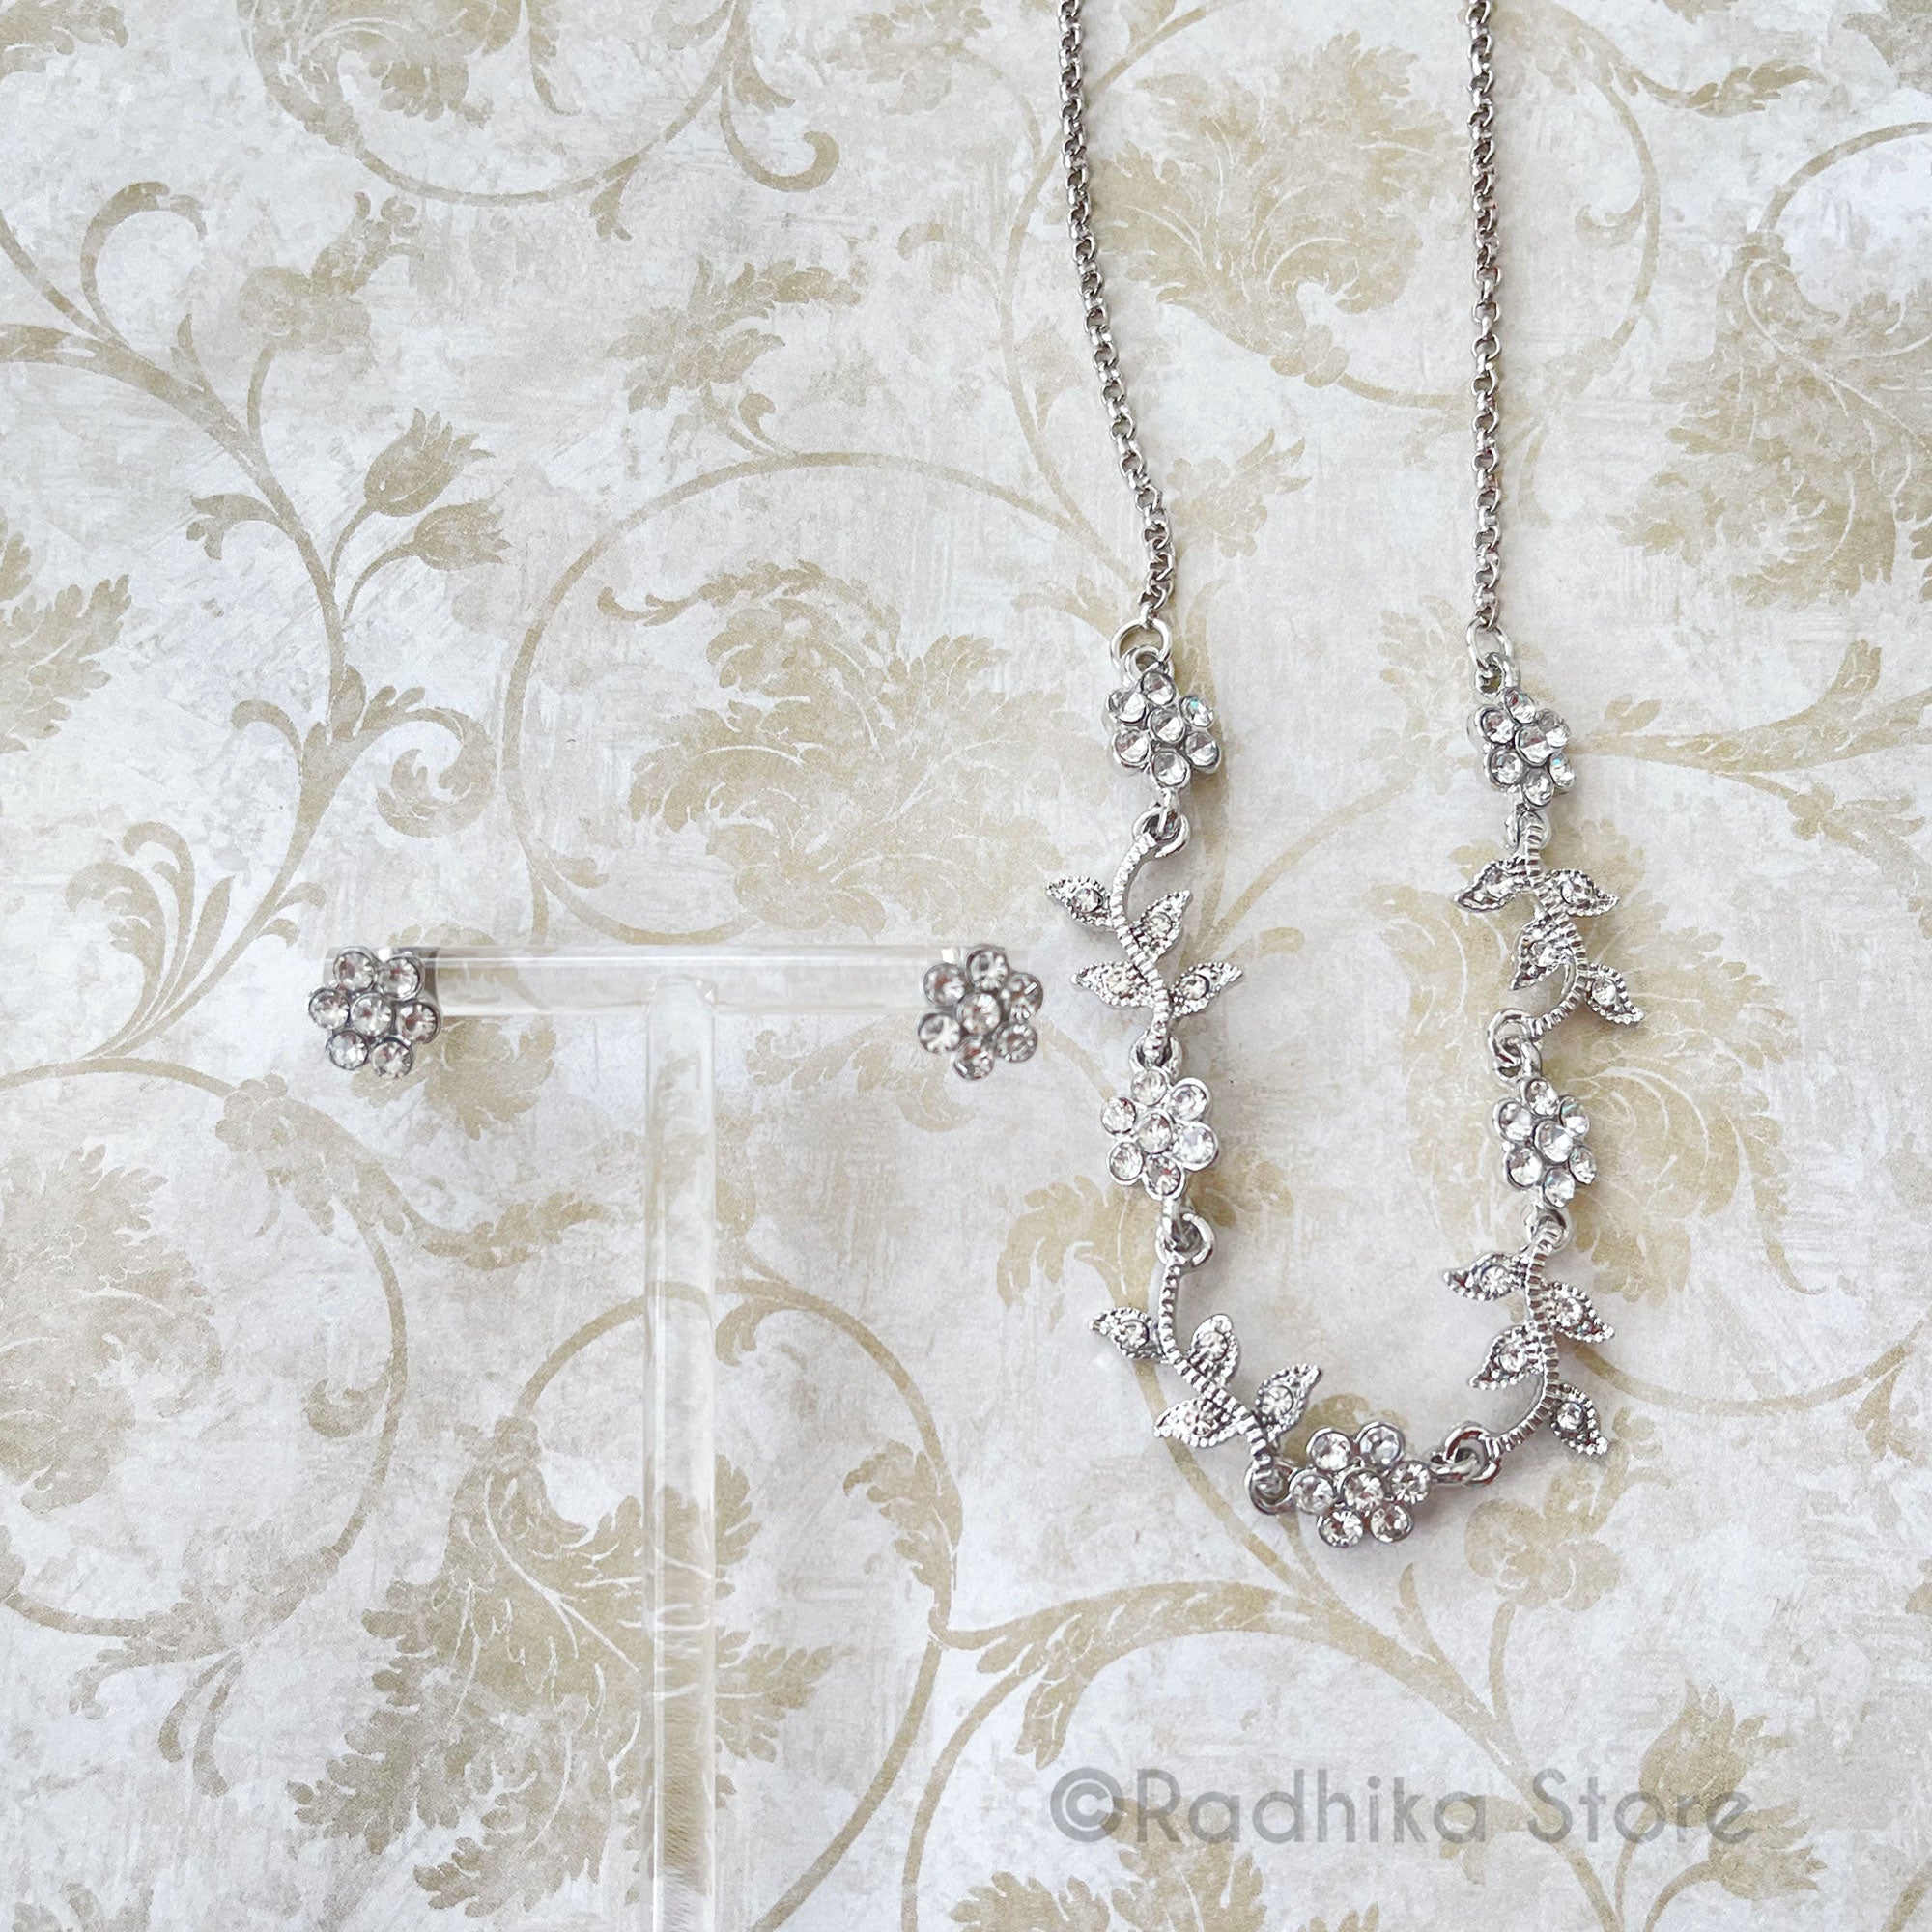 Crystal-Vrindavan Flower Vine- Rhinestone Deity Necklace And Earring Set-6 Inch